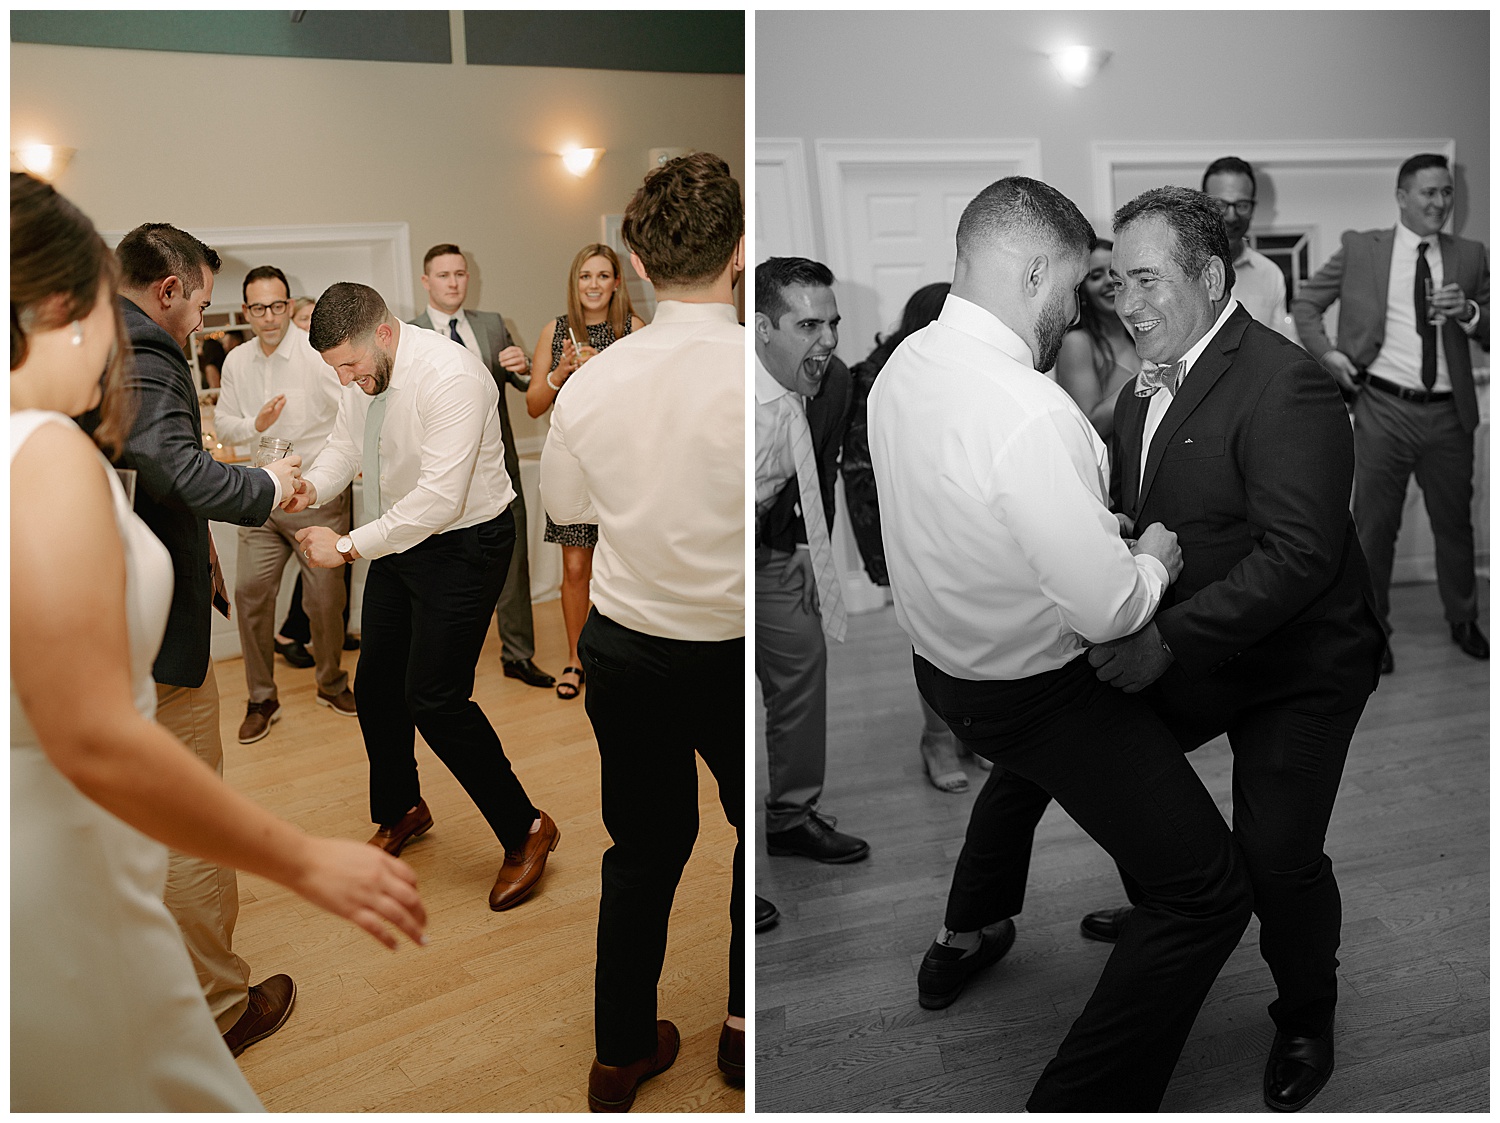 Candid wedding dancing reception photos